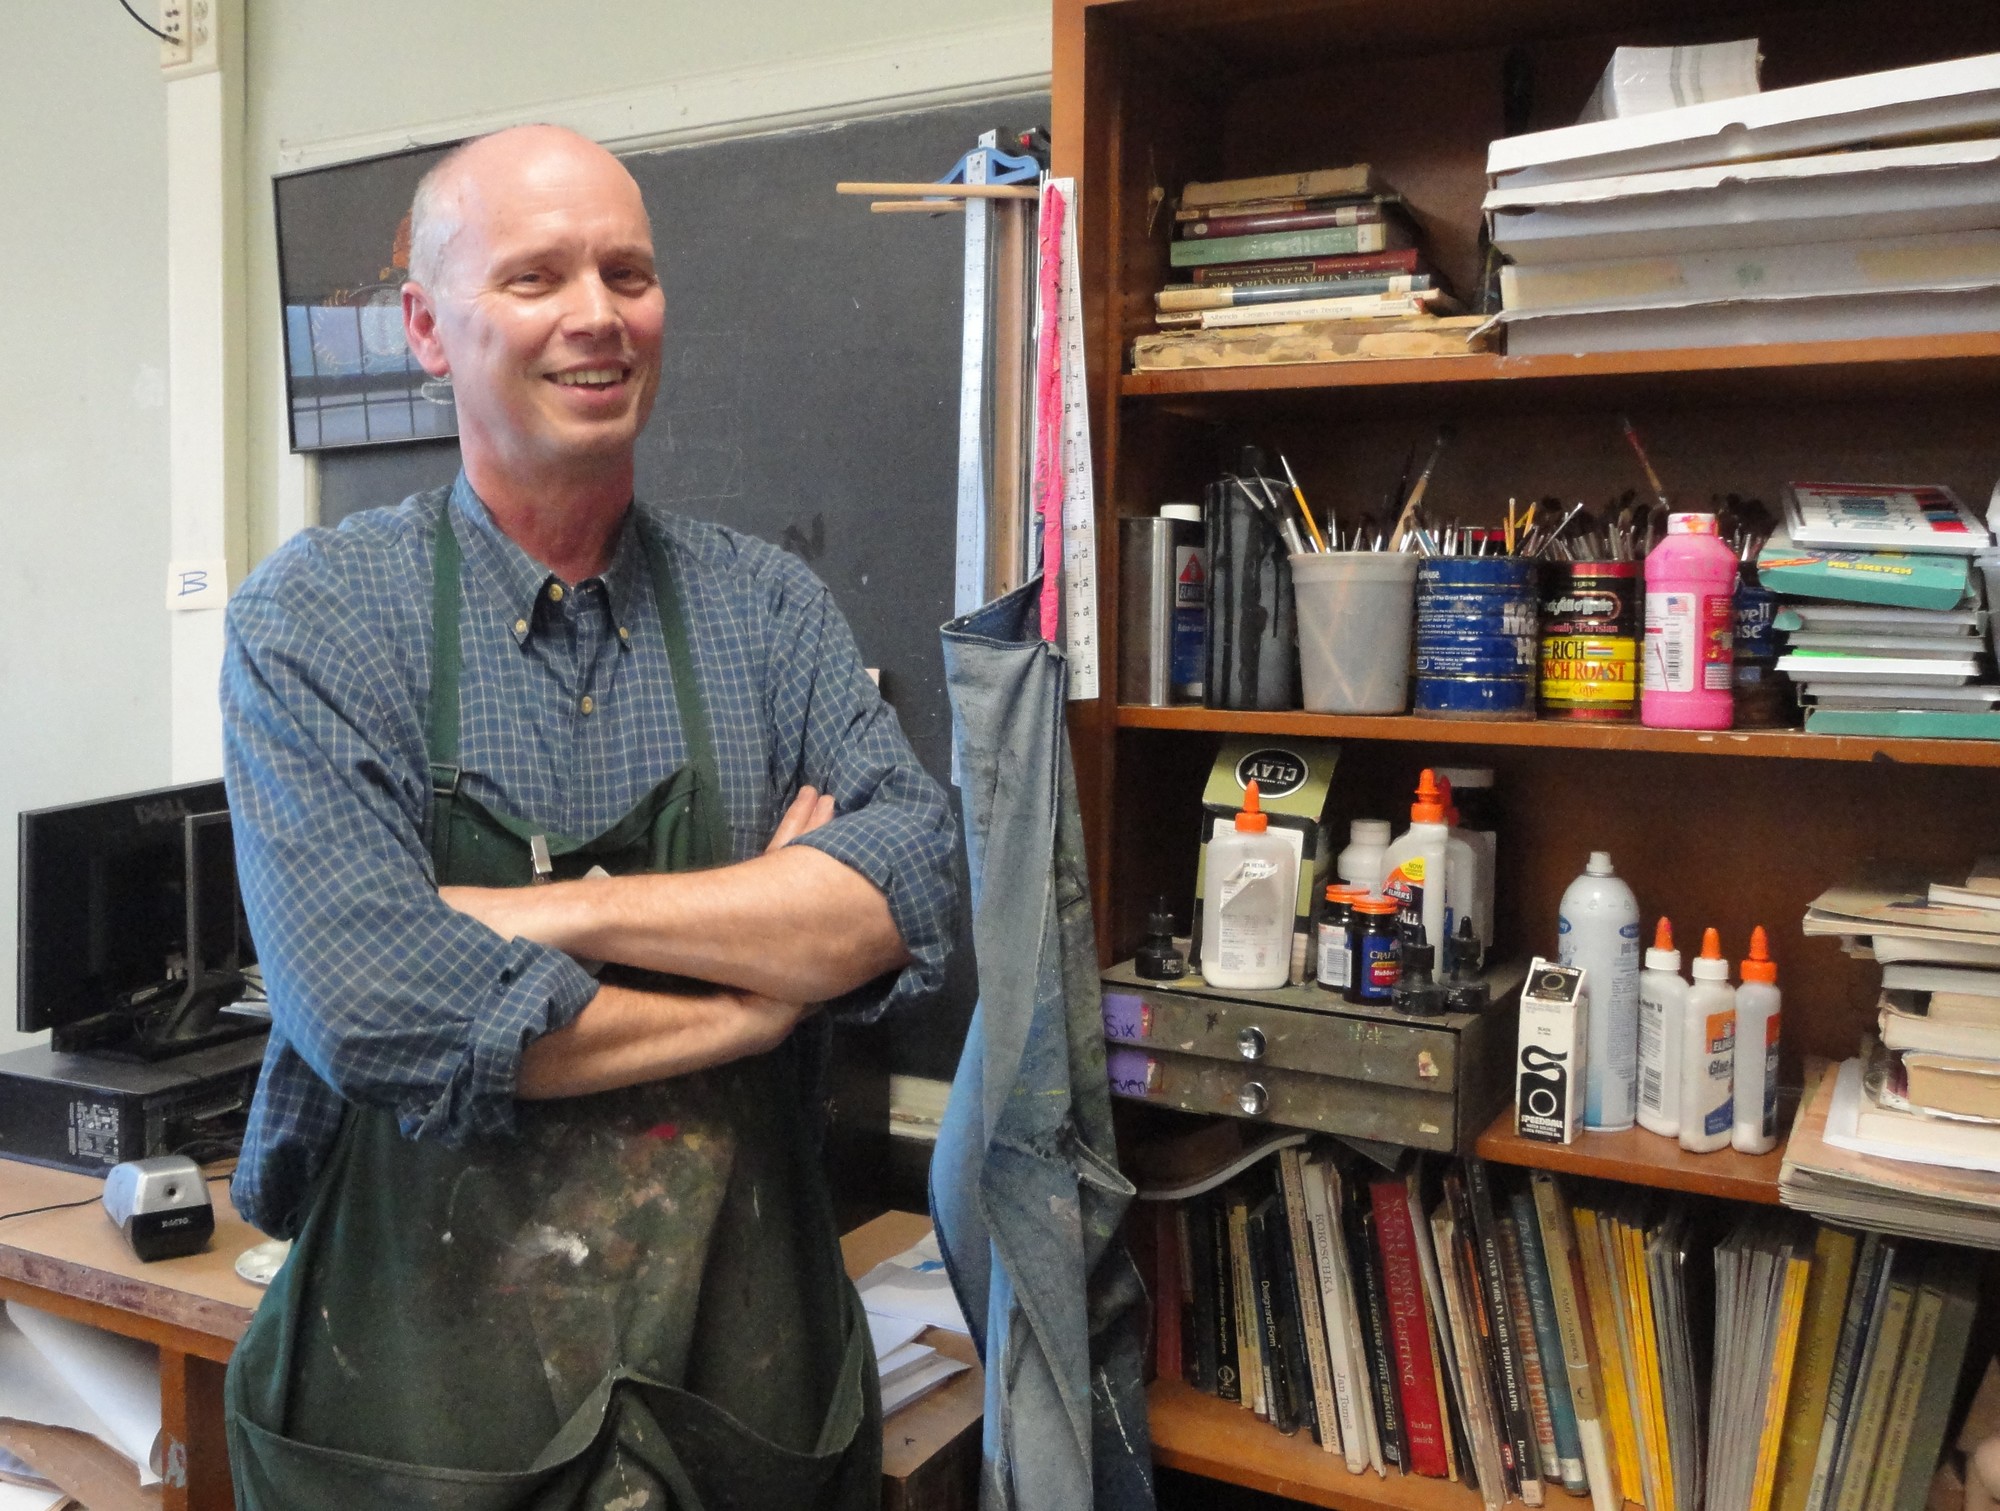 John Bishop worked as an art teacher at East Rockaway High School for 35 years.